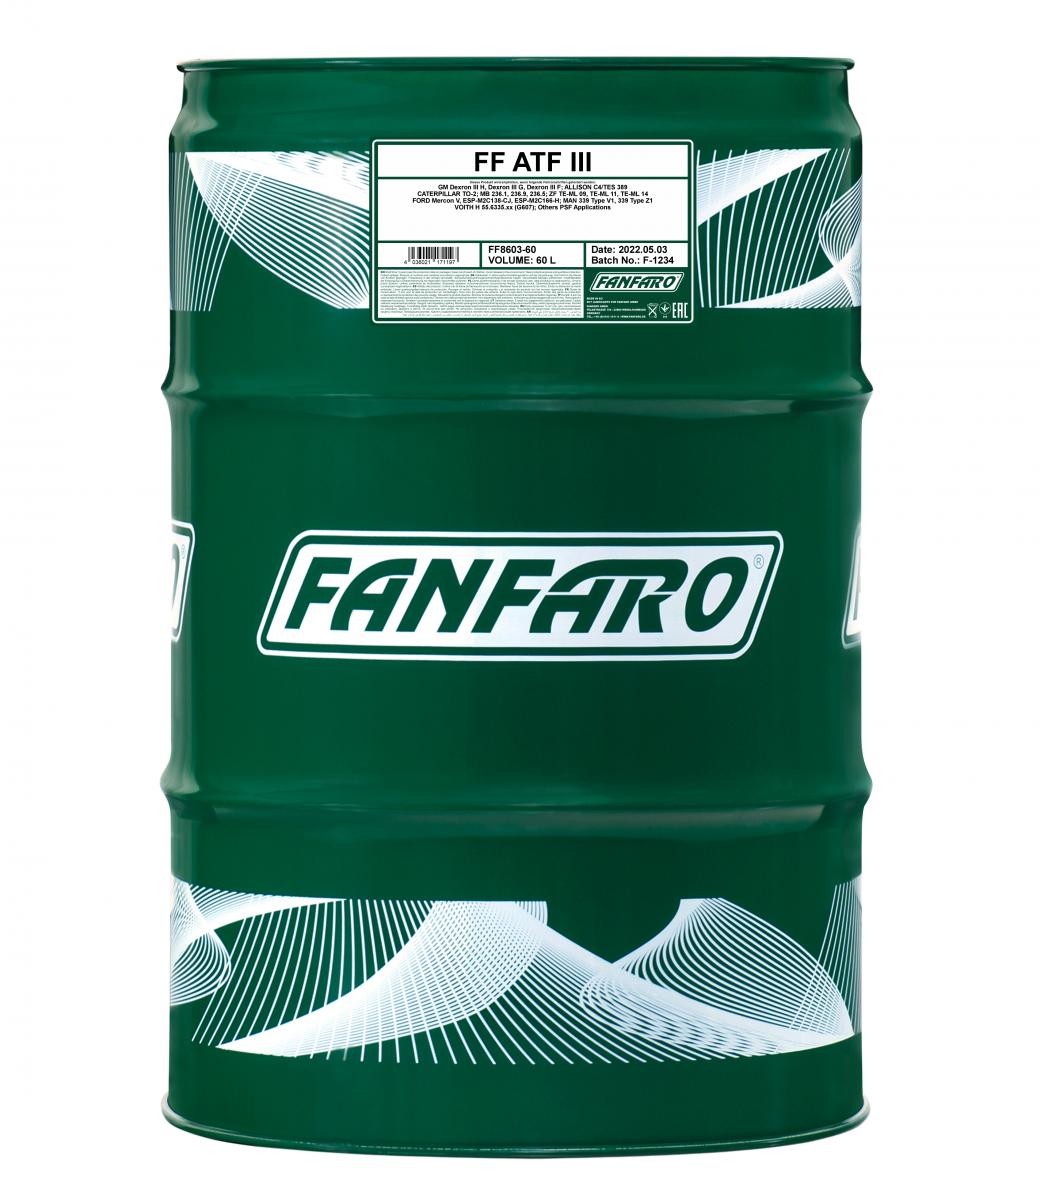 FF8603-60 FANFARO Automatikgetriebeöl VOLVO FH